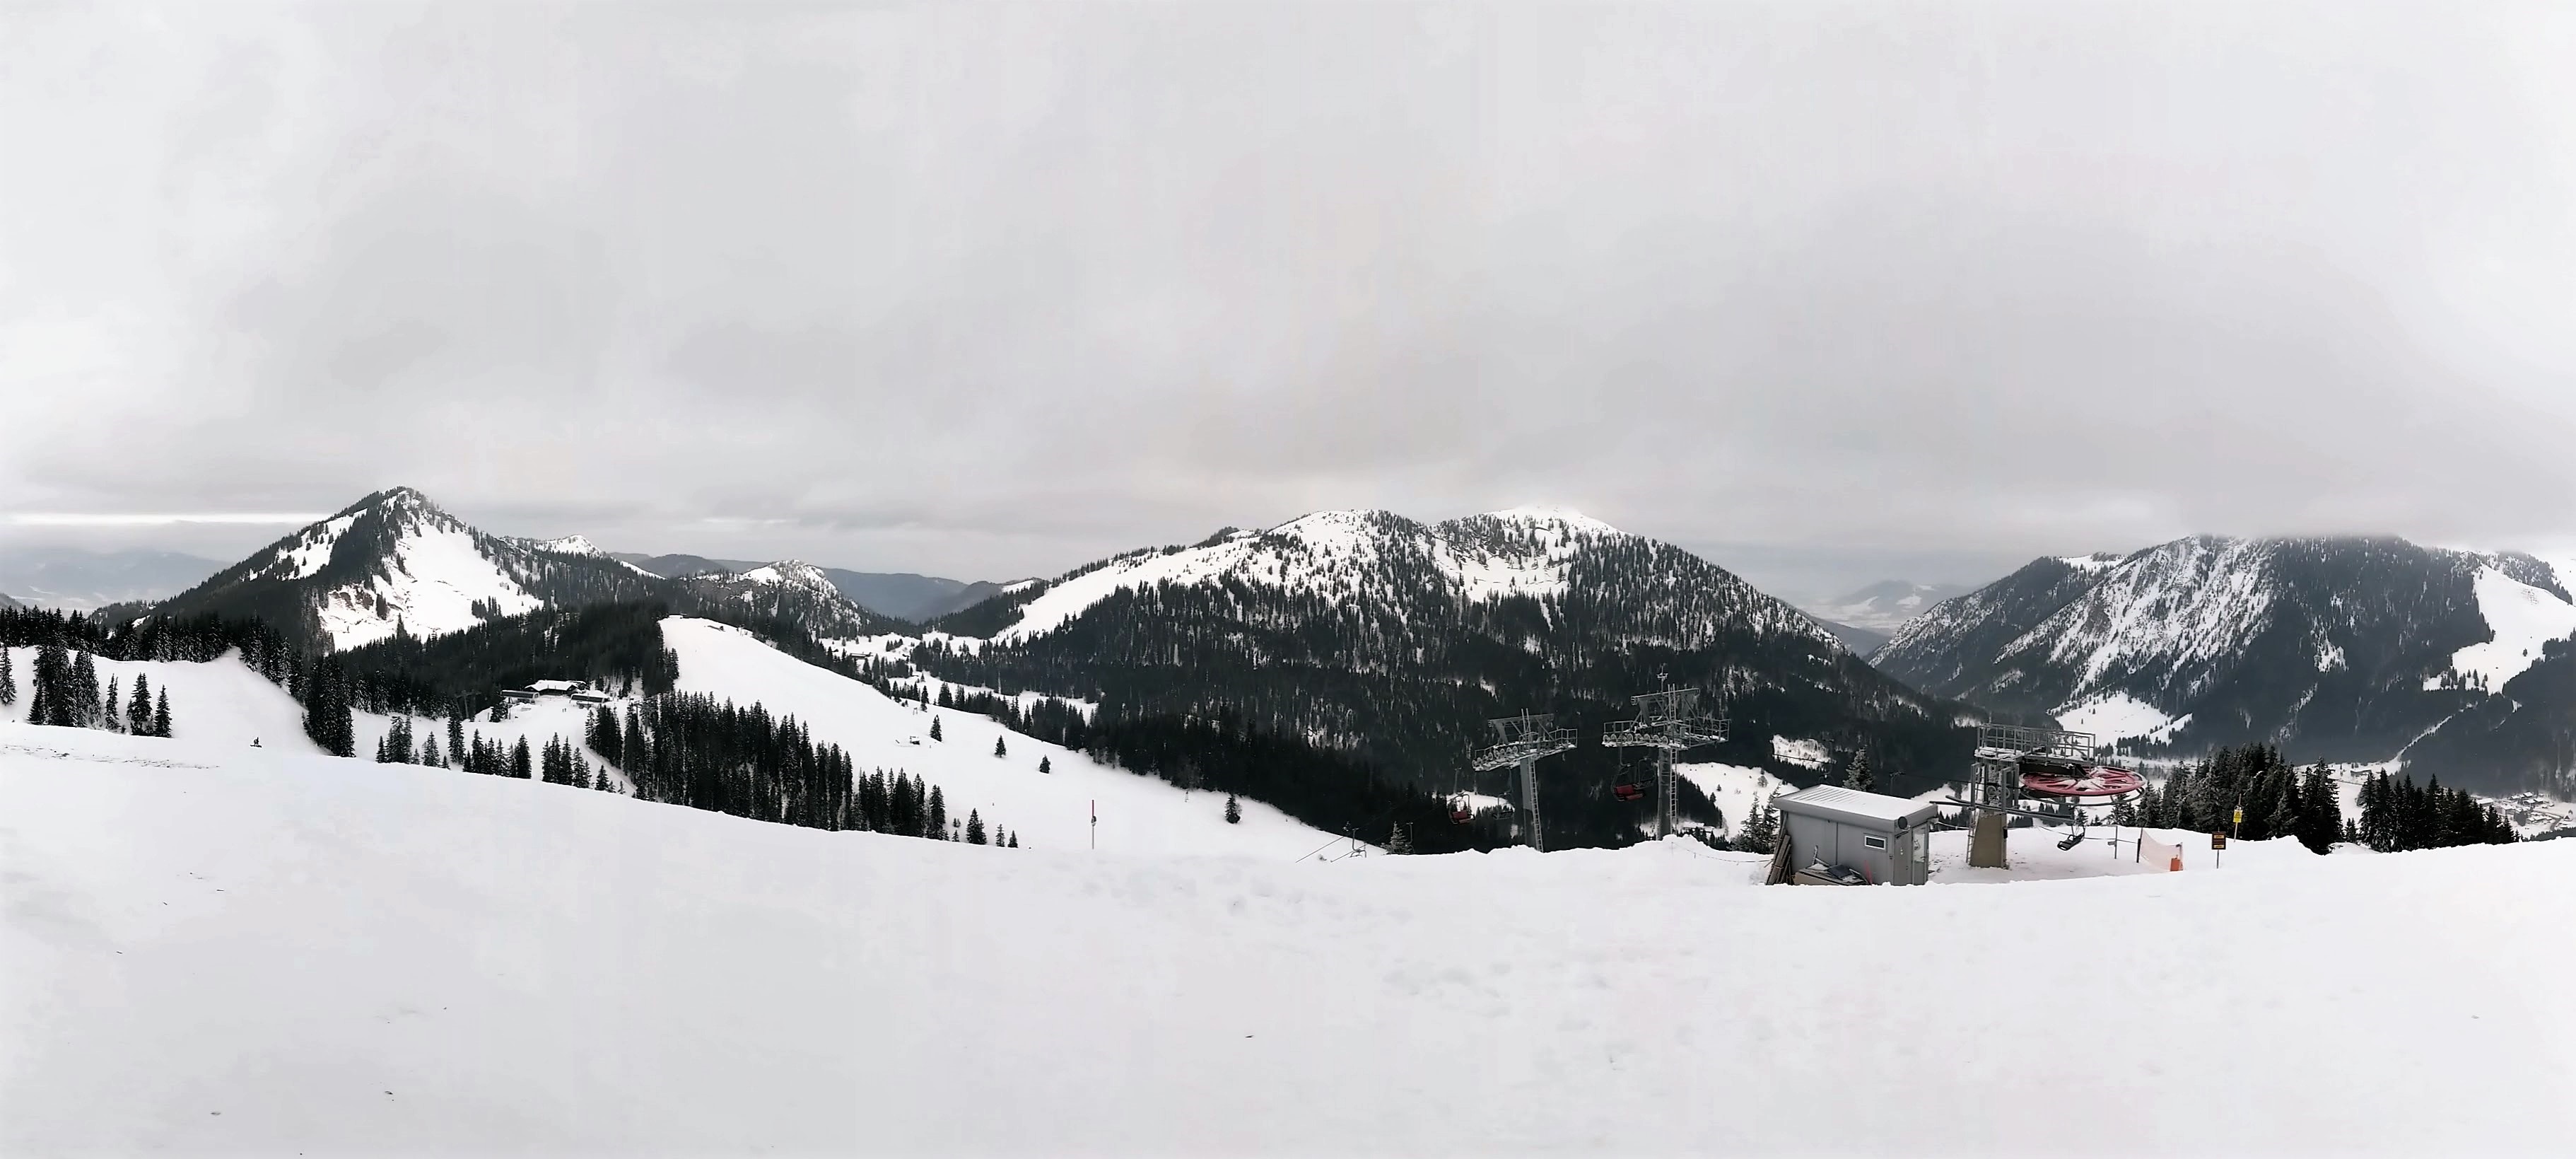 Spitzingsee: Rosskopf skitour - Jan 19